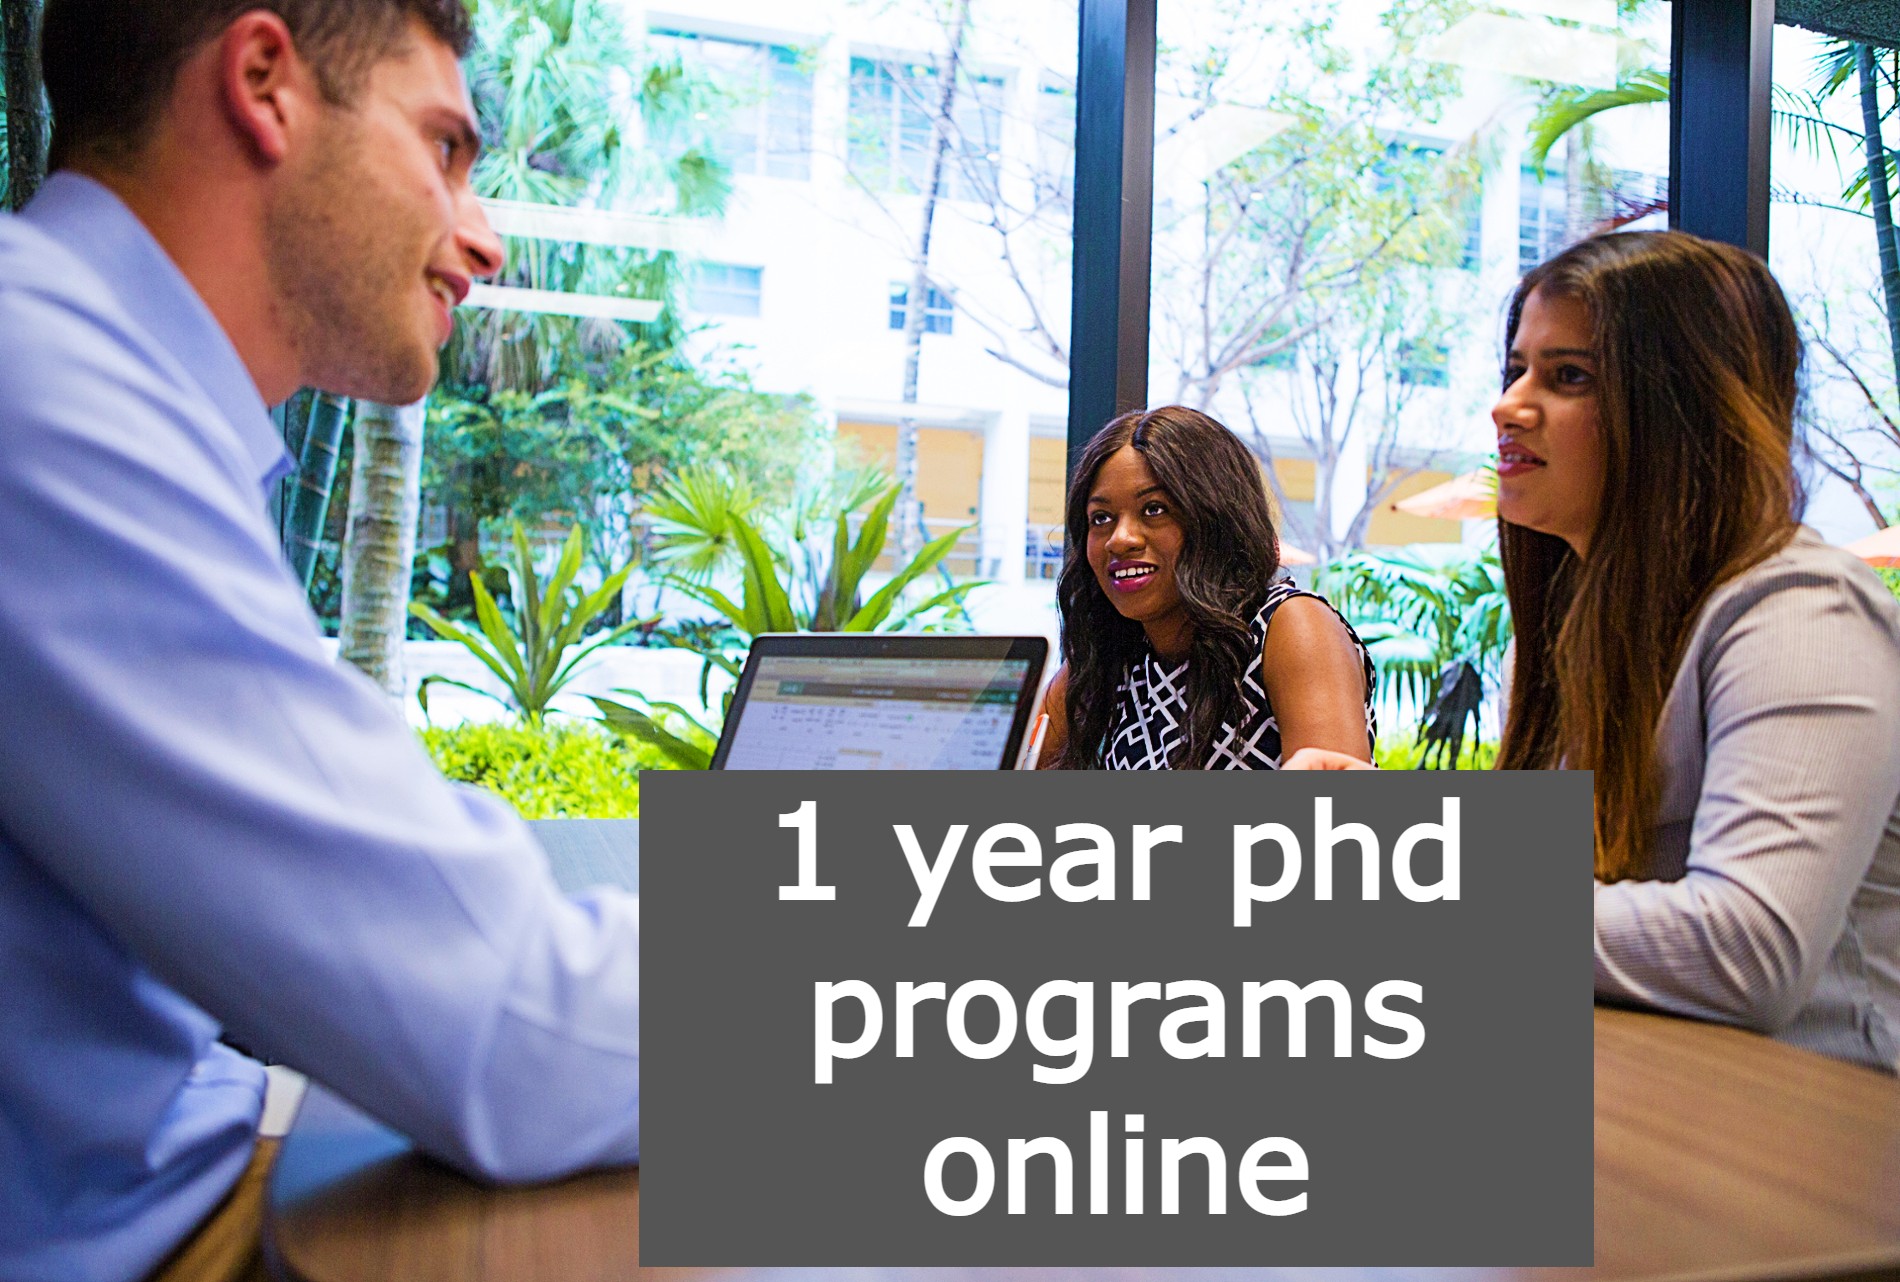 1 year phd programs online uk